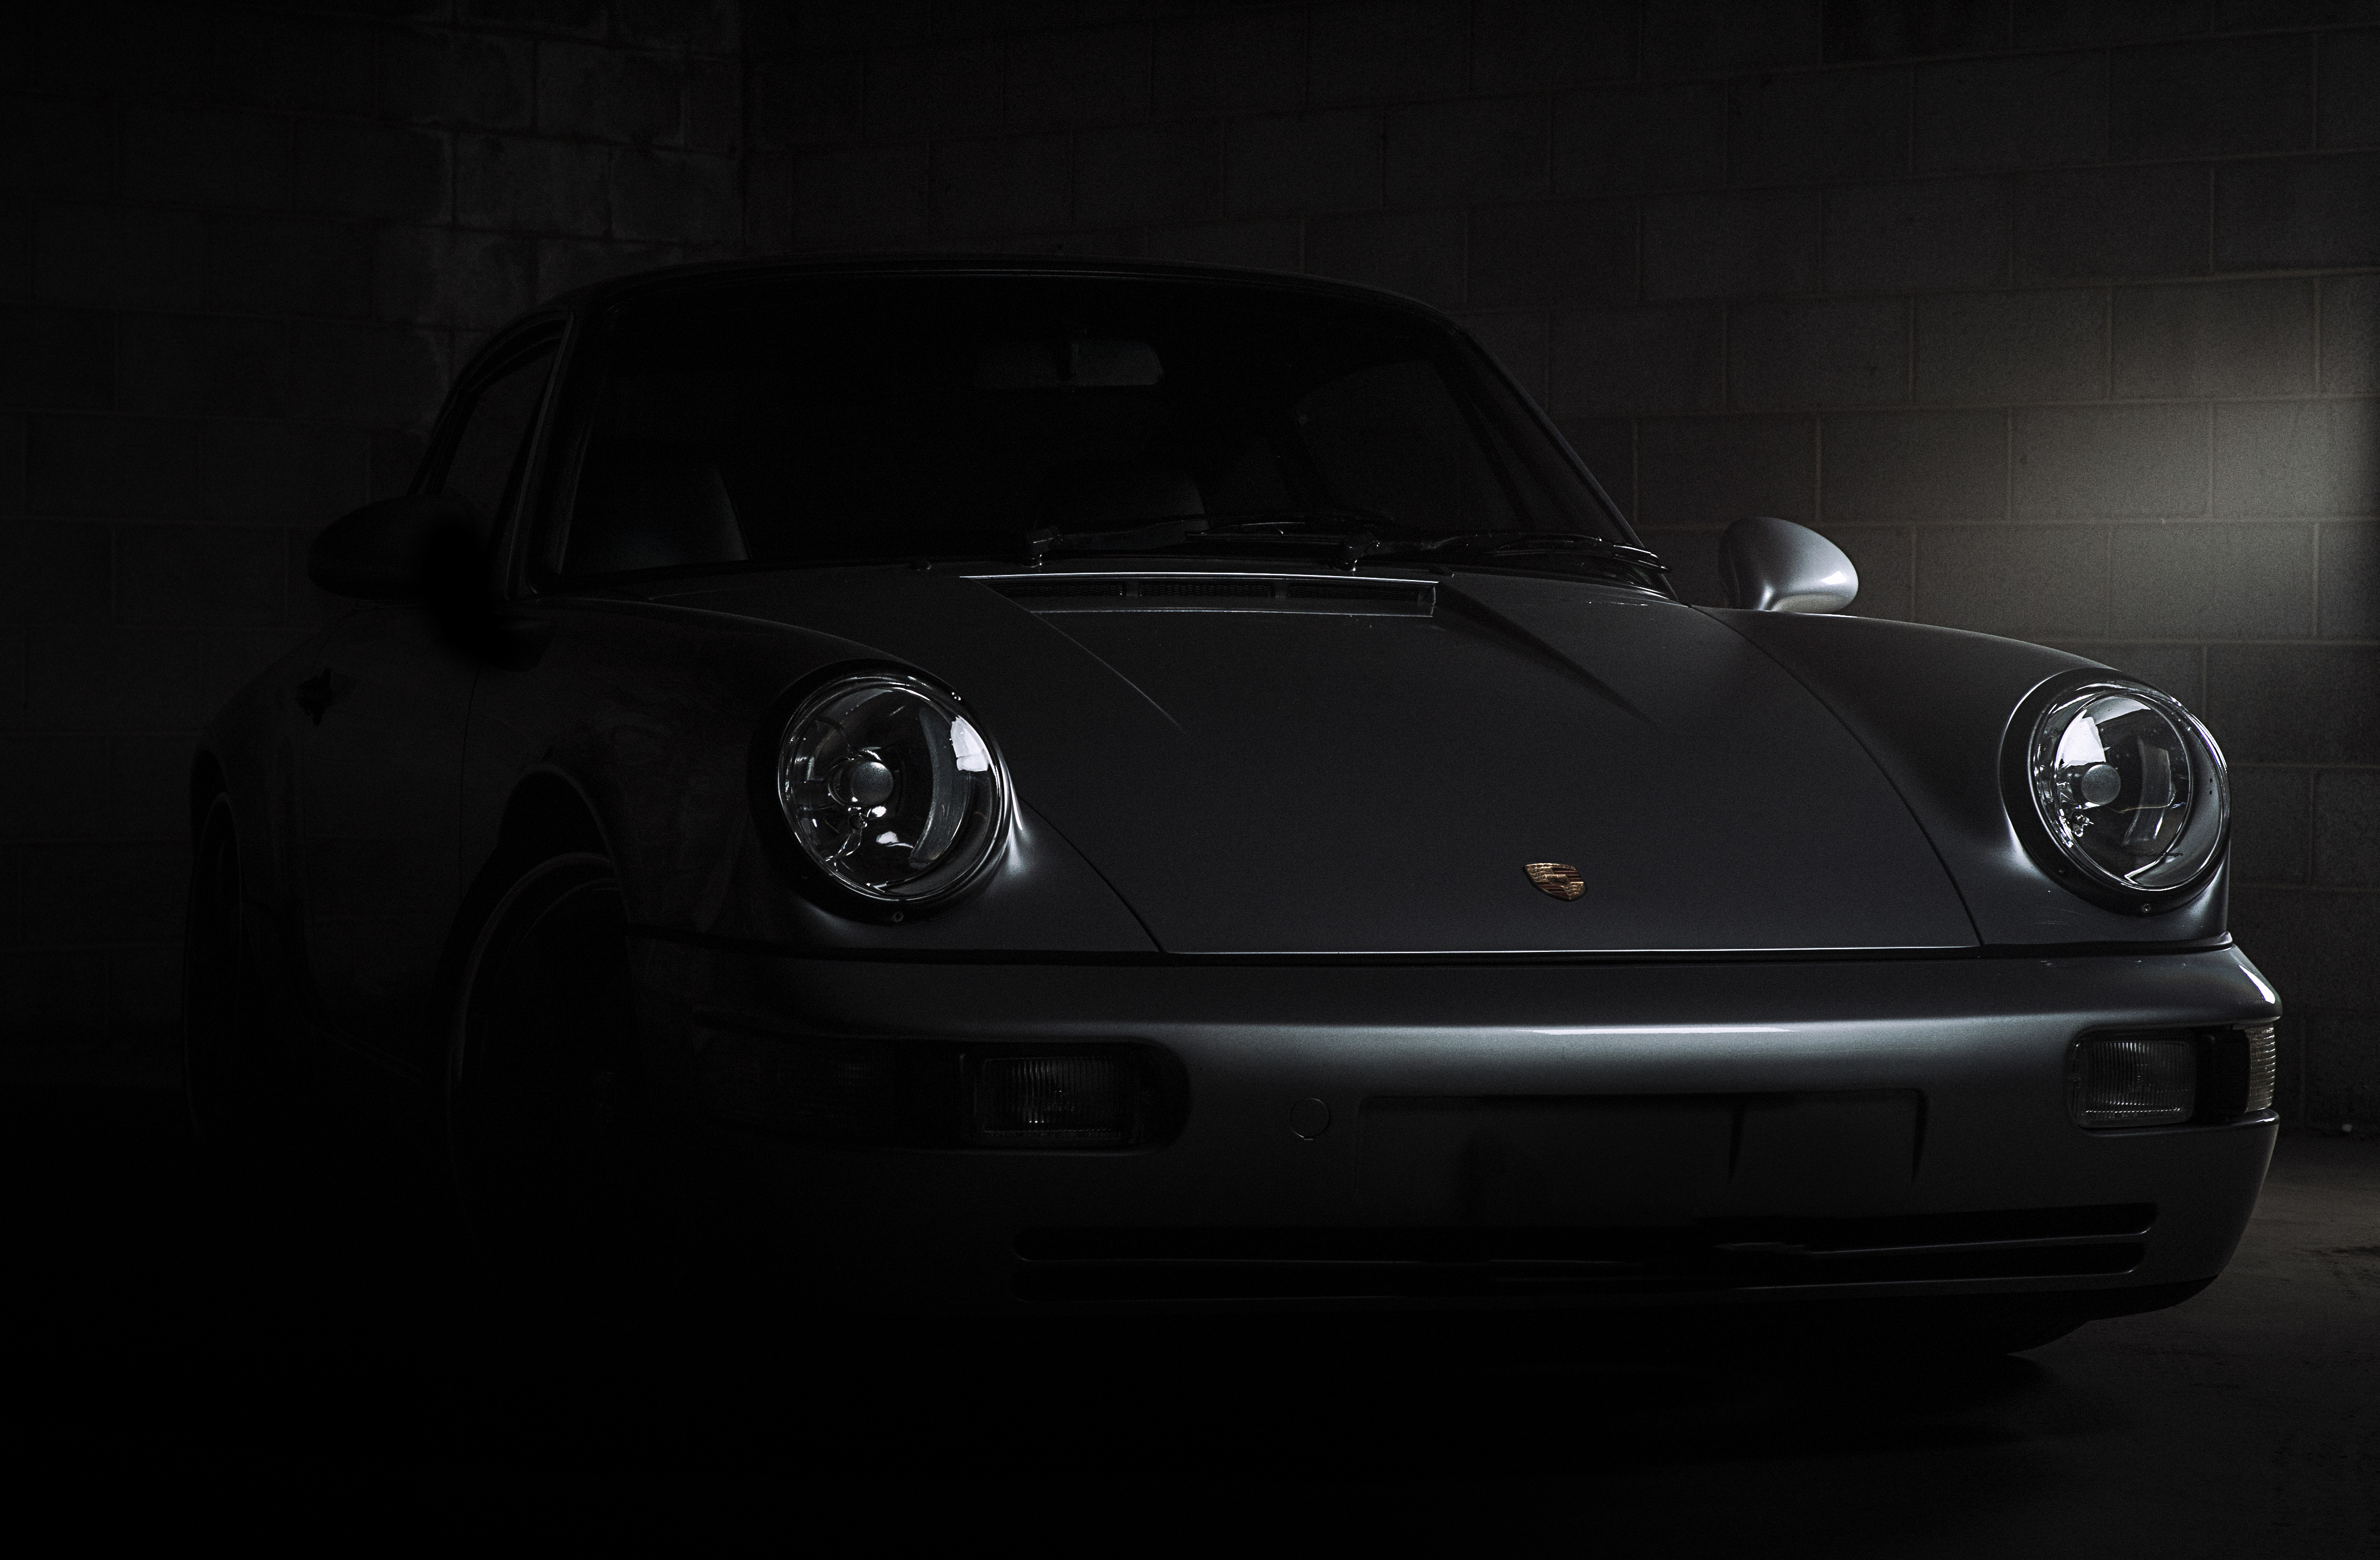 Free photo Wallpaper silhouette of Porsche 911 Carrera in darkness